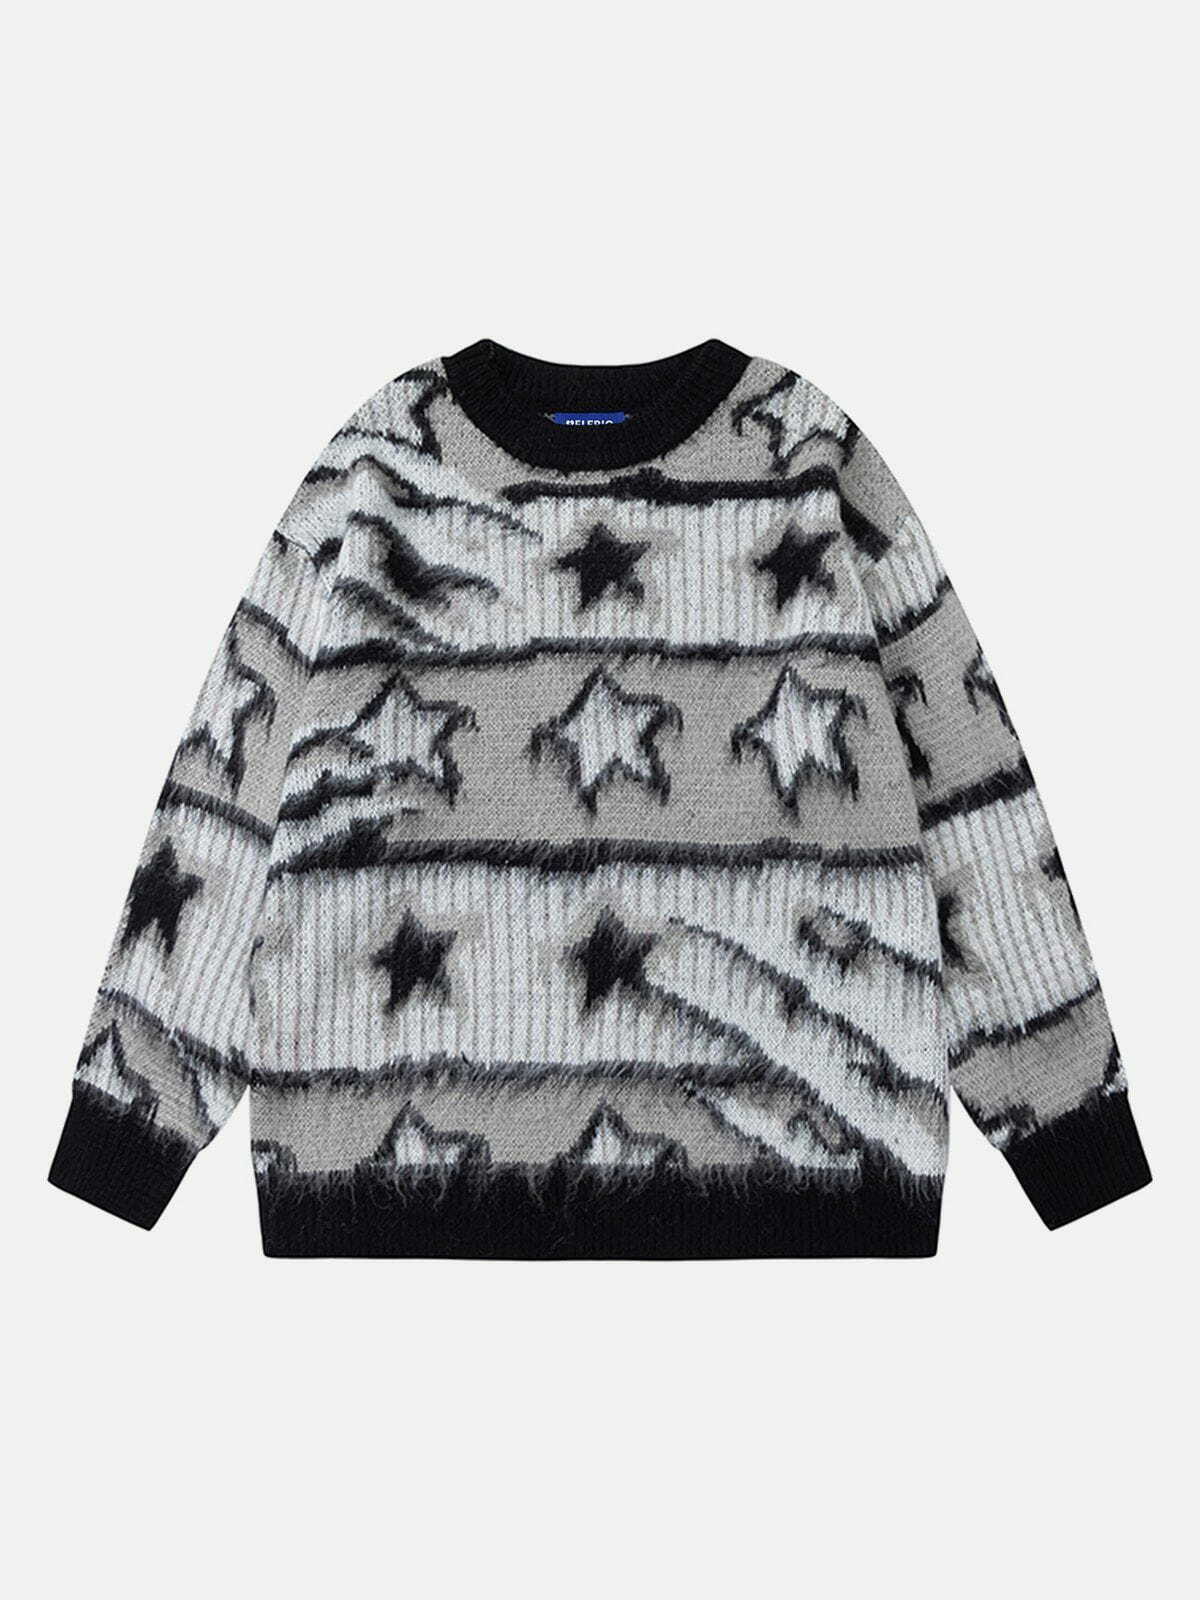 youthful blurring star sweater   chic & trending design 2434